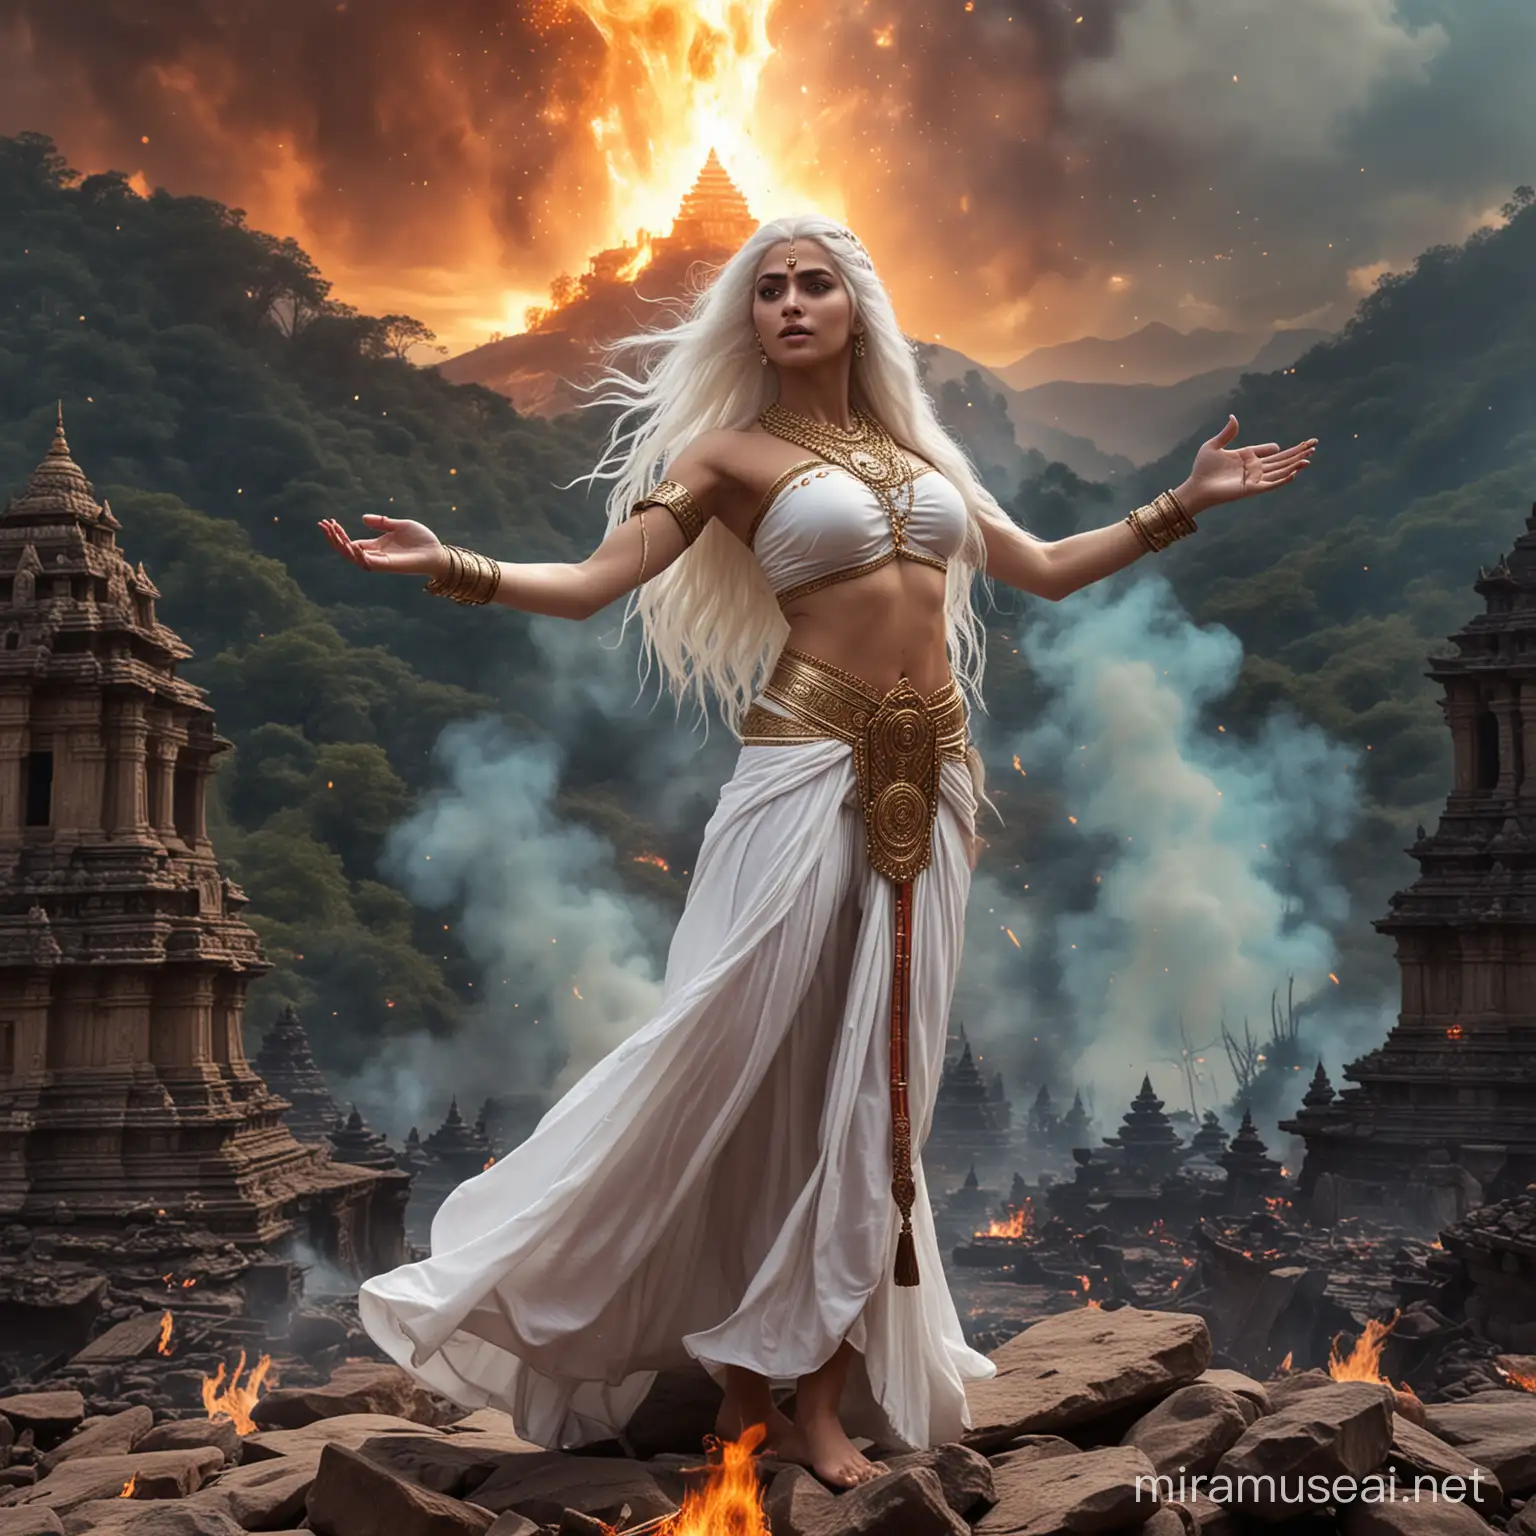 Hindu Goddess Empress Summoning Cosmic Fire in Mystical Battle